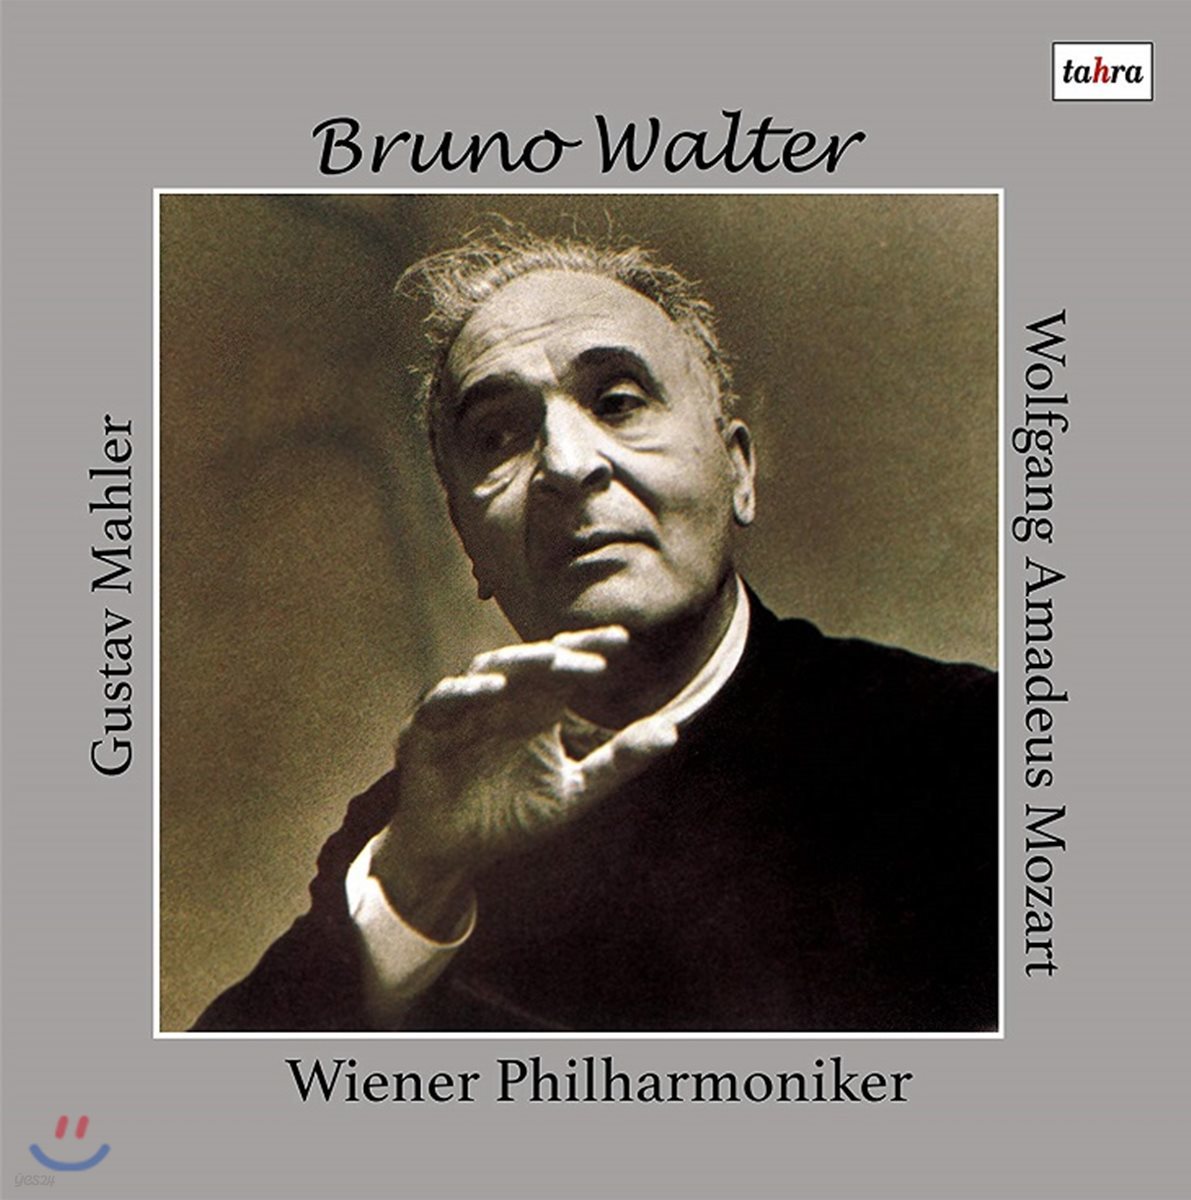 Bruno Walter 말러: 대지의 노래 / 모차르트: 교향곡 40번 (Mahler: Das Lied von der Erde / Mozart: Symphony No. 40) 브루노 발터, 빈 필하모닉 오케스트라 [2LP]